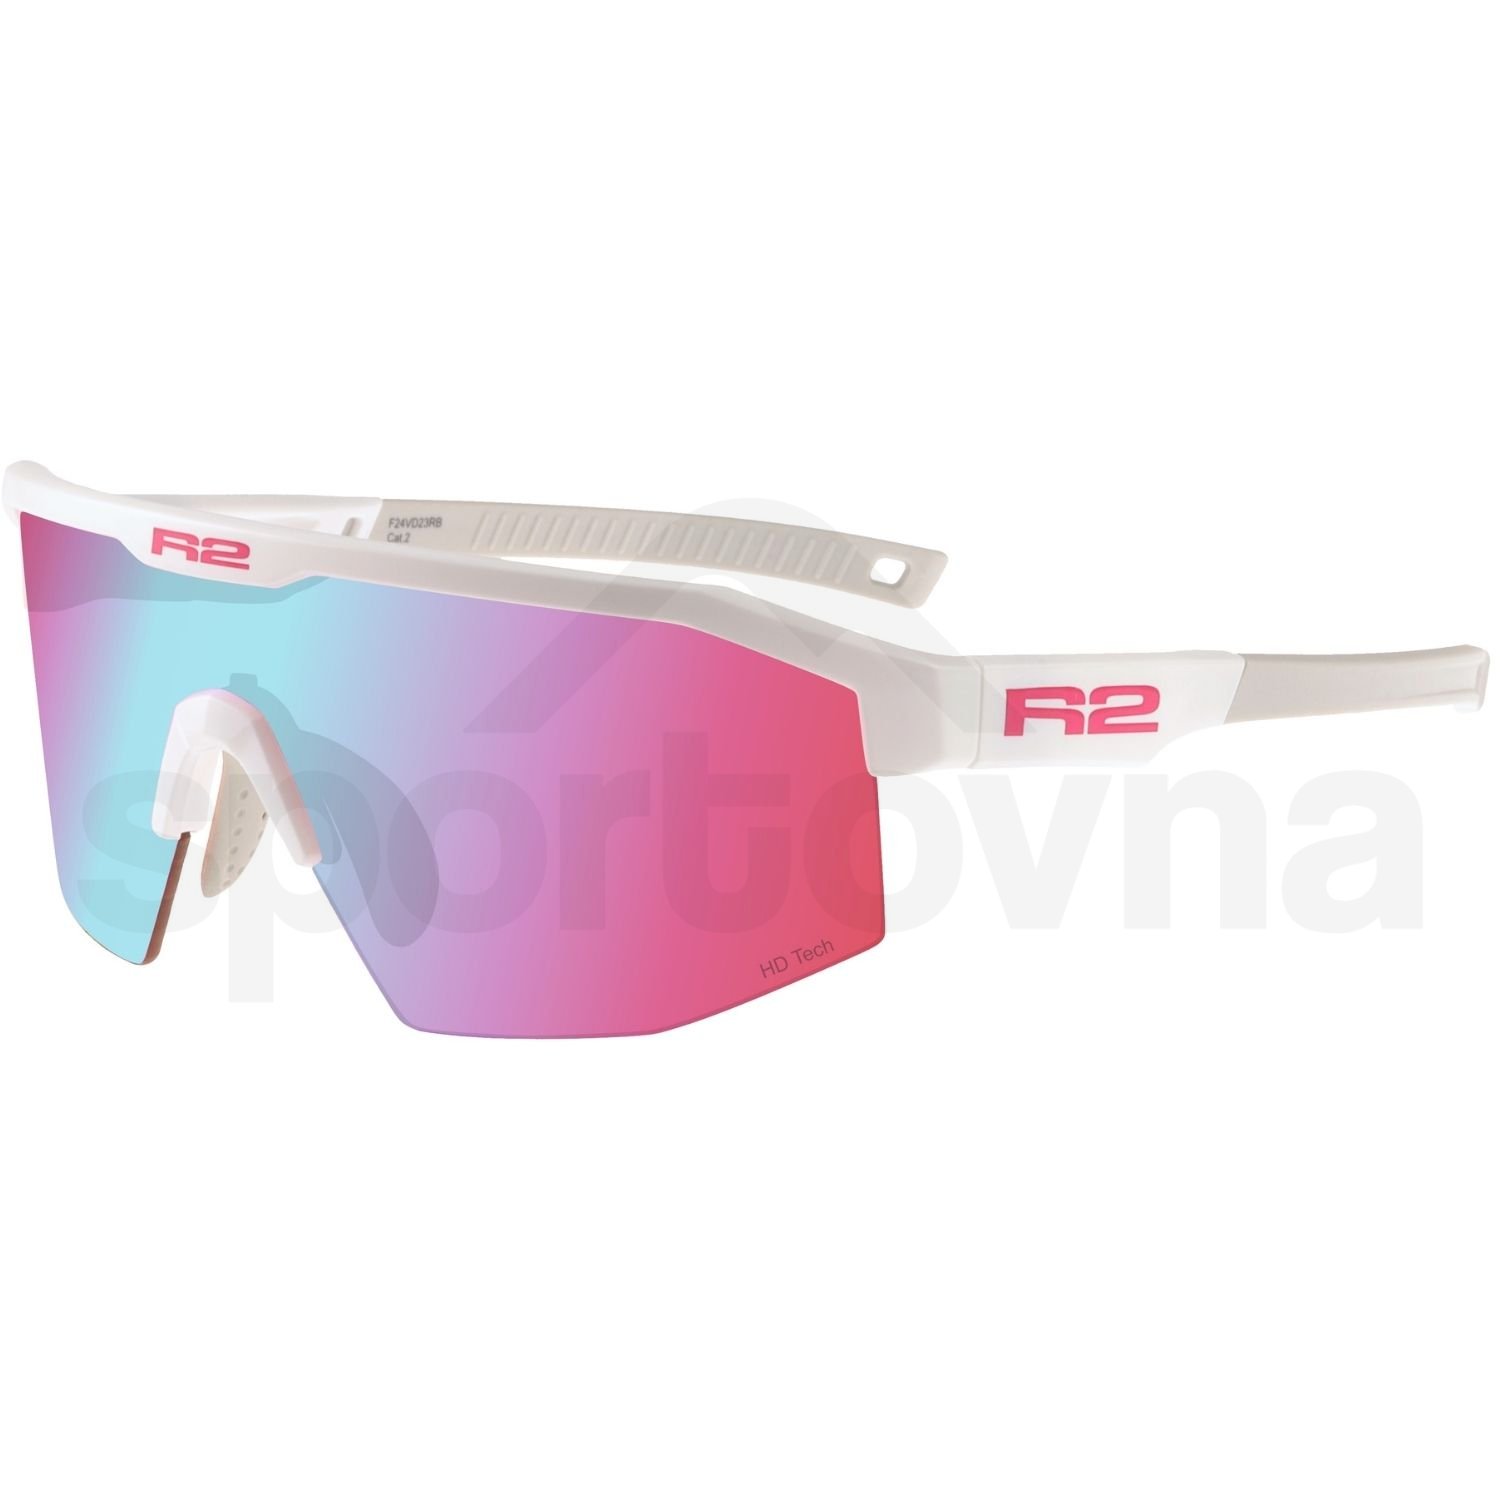 Sportovní brýle R2 GAIN AT108B - bílá/růžová